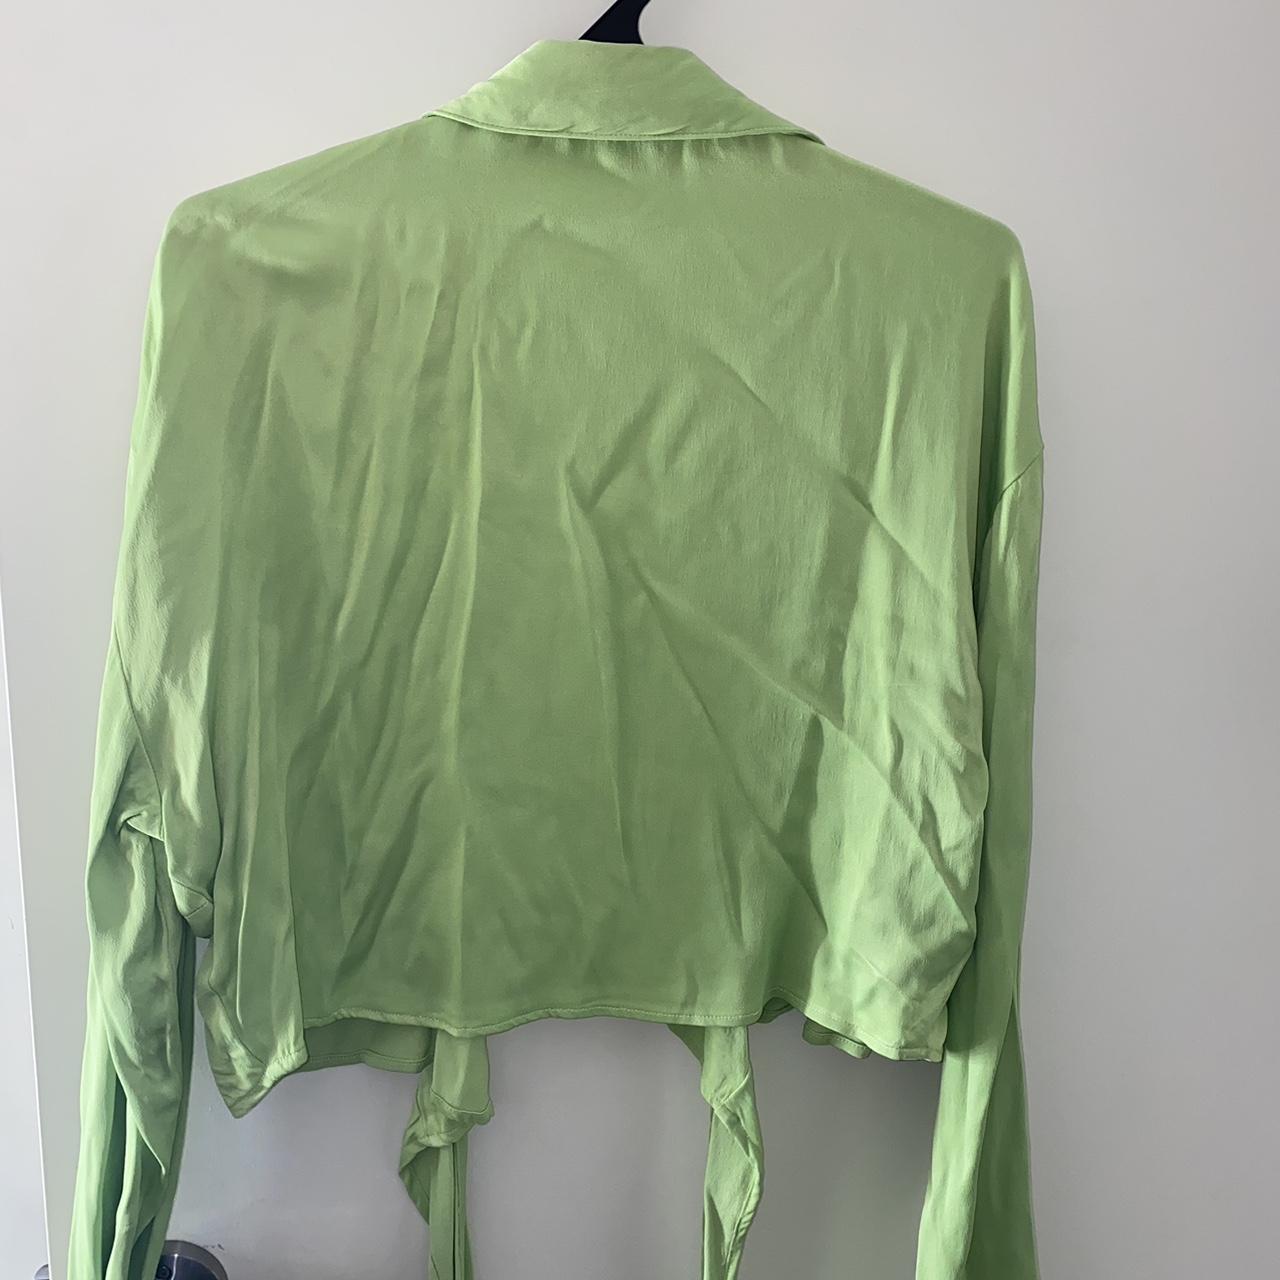 Green Glassons top, ties around the waist. - Depop